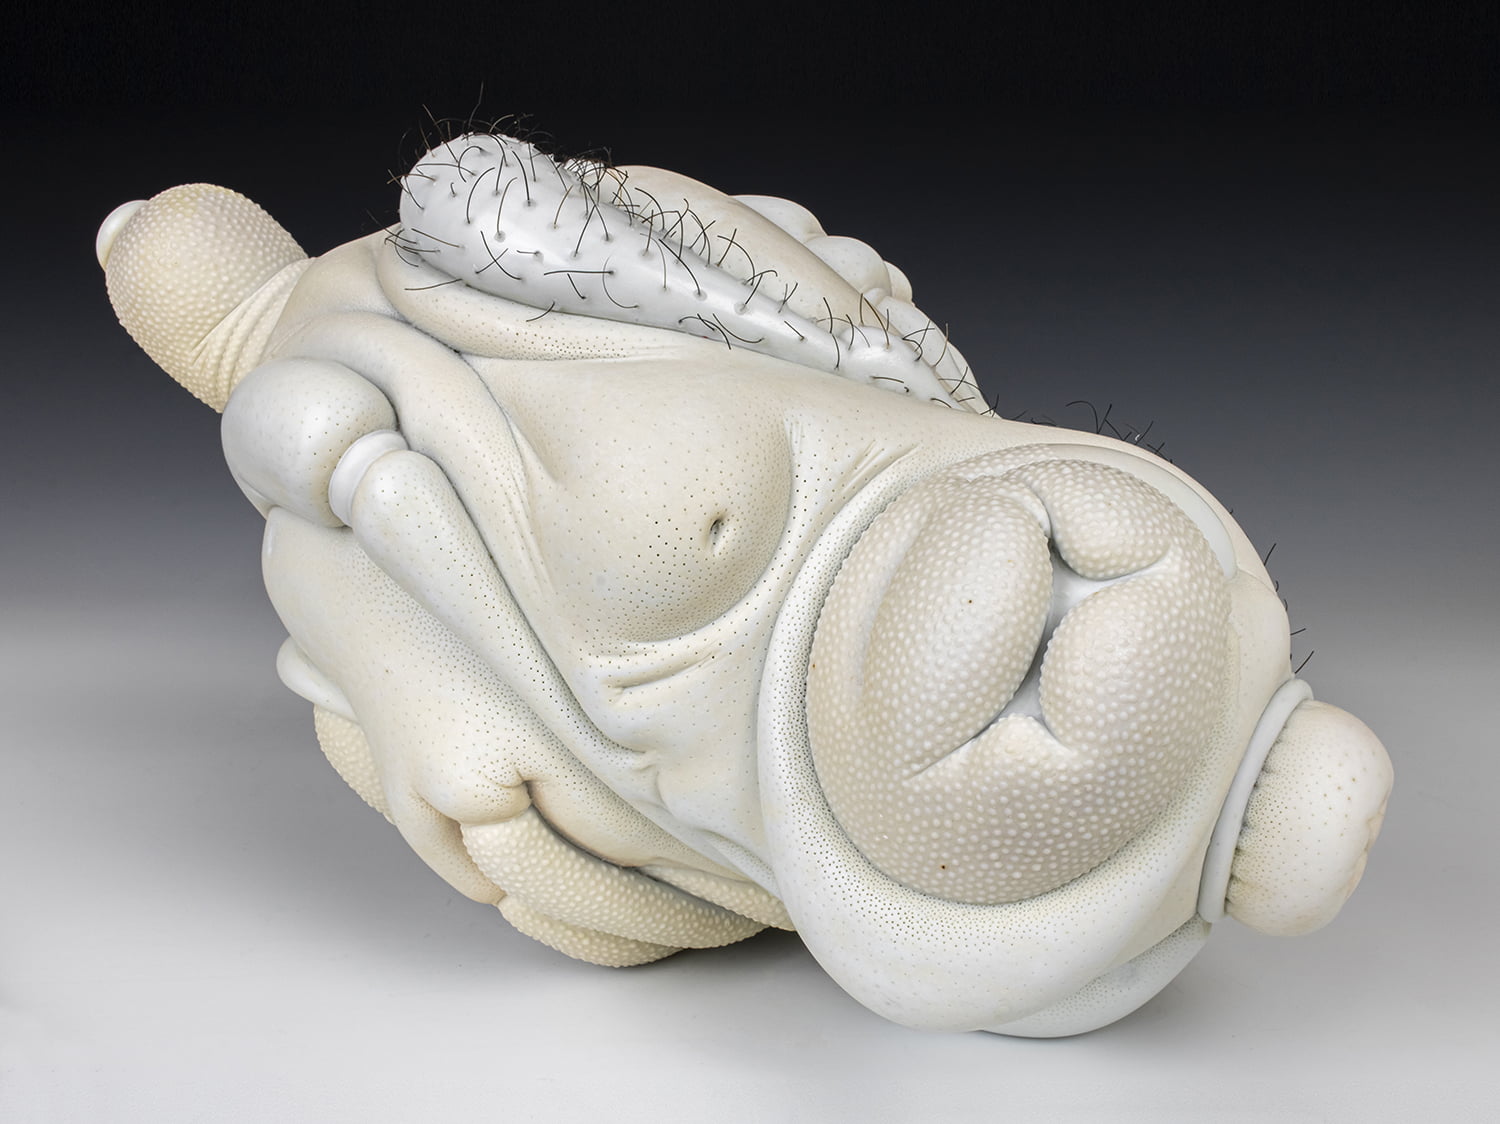 Jason Briggs "Ventura" (alternate 2). porcelain and mixed media sculpture ceramics.